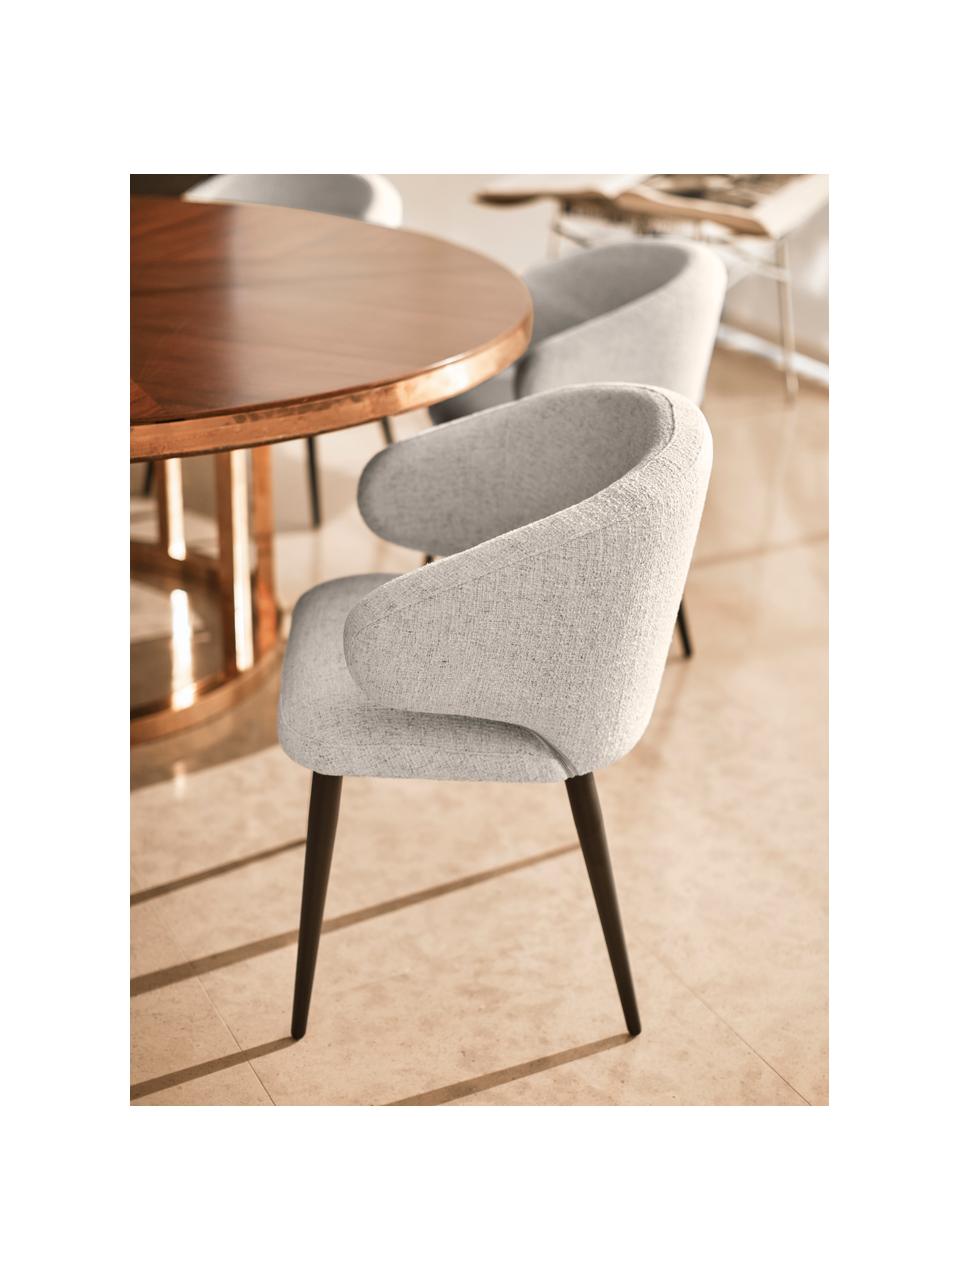 Chaise design moderne Celia, Tissu gris clair, larg. 57 x prof. 62 cm